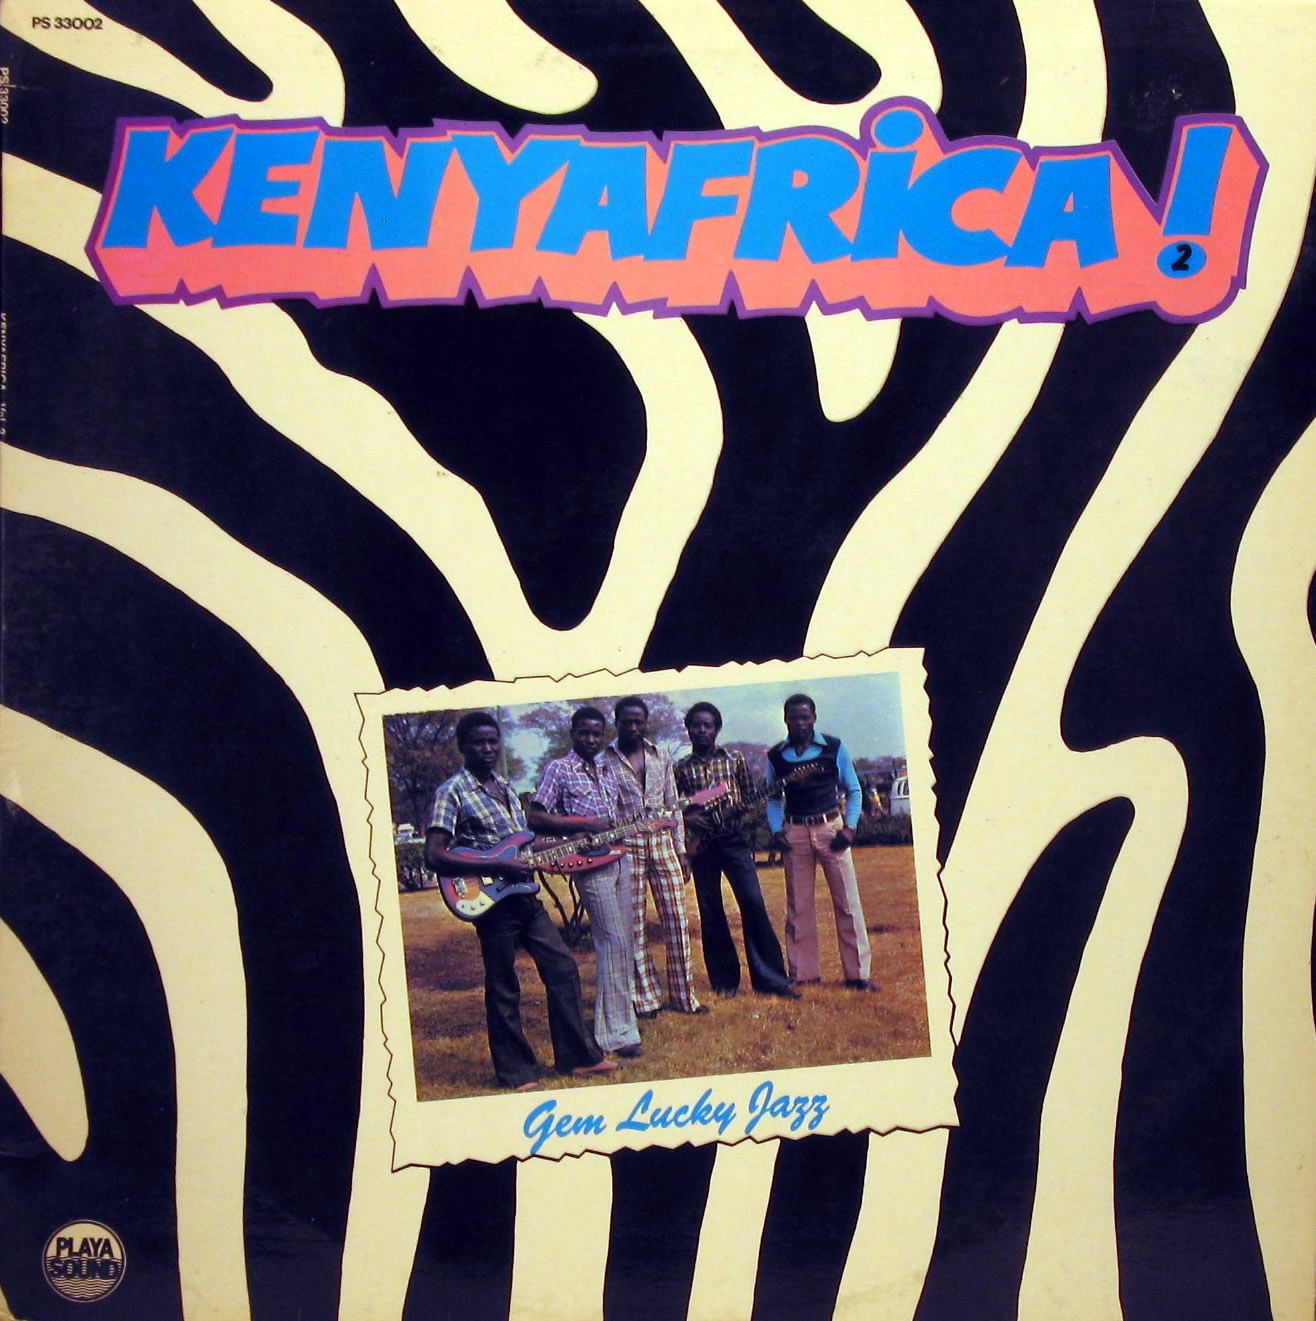 Gem Lucky Jazz – Kenyafrica ! vol.2,Playa Sound 1976 Kenyafrica-vol.2